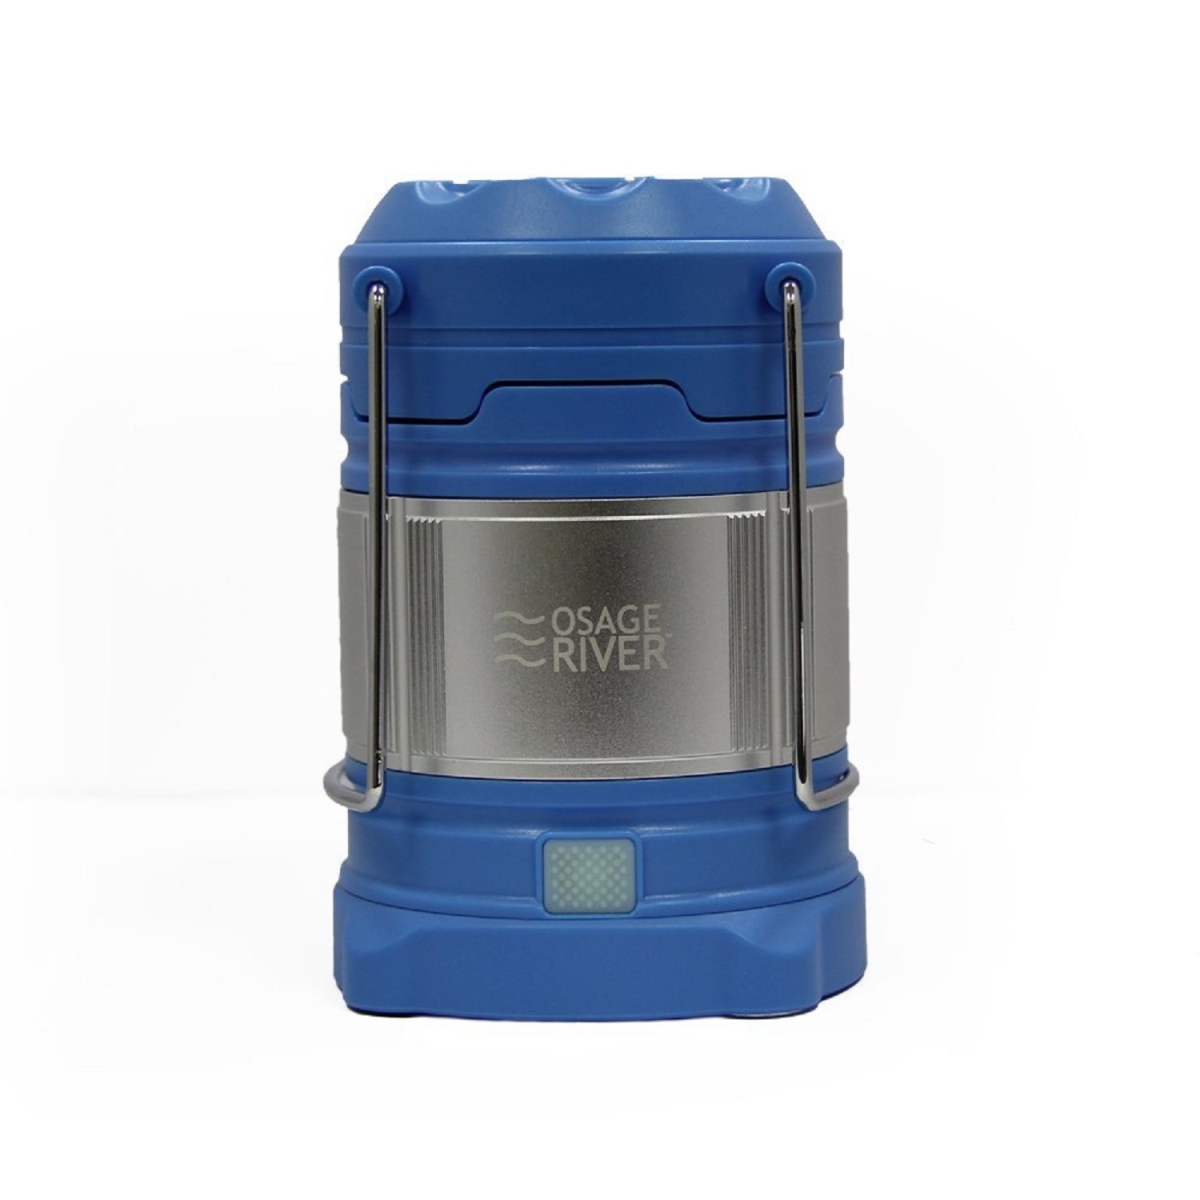 1107968 Led Lantern With Usb Power Bank - Blue